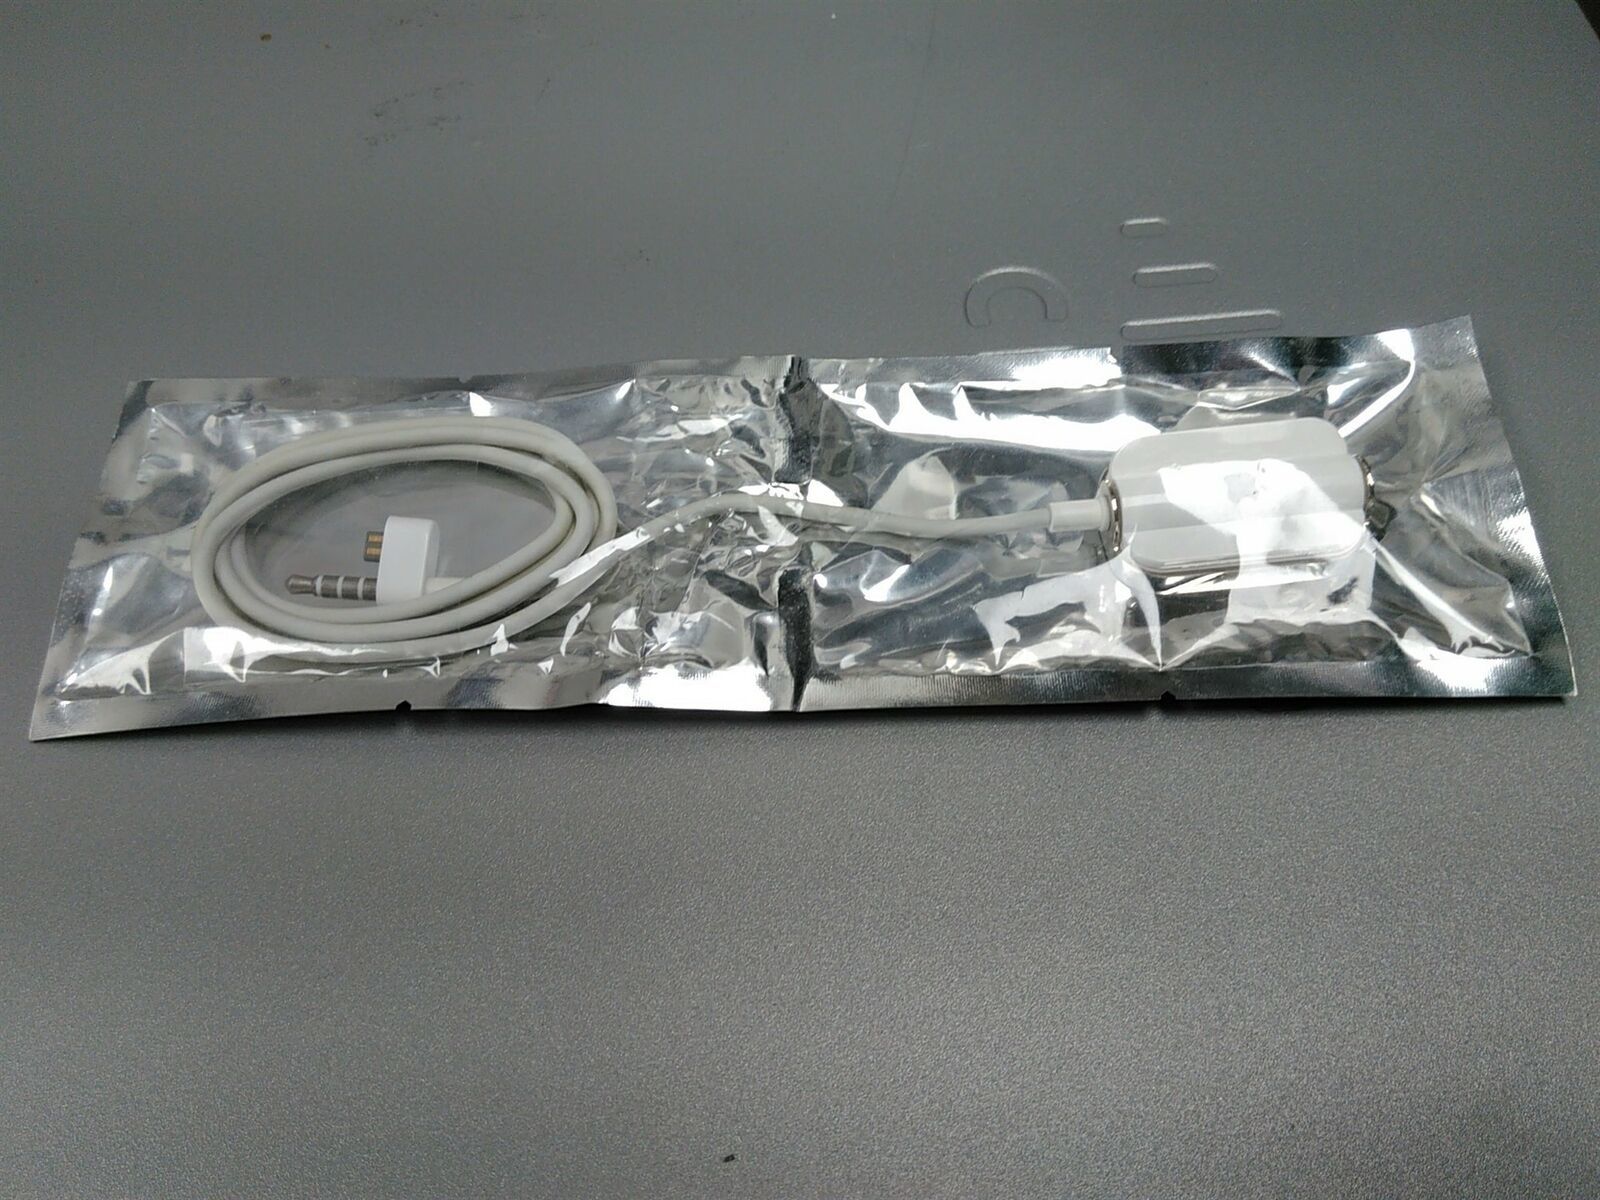 Apple iPod Shuffle 2GB PINK A1204 Bundle Brand NEW Sealed Plastic